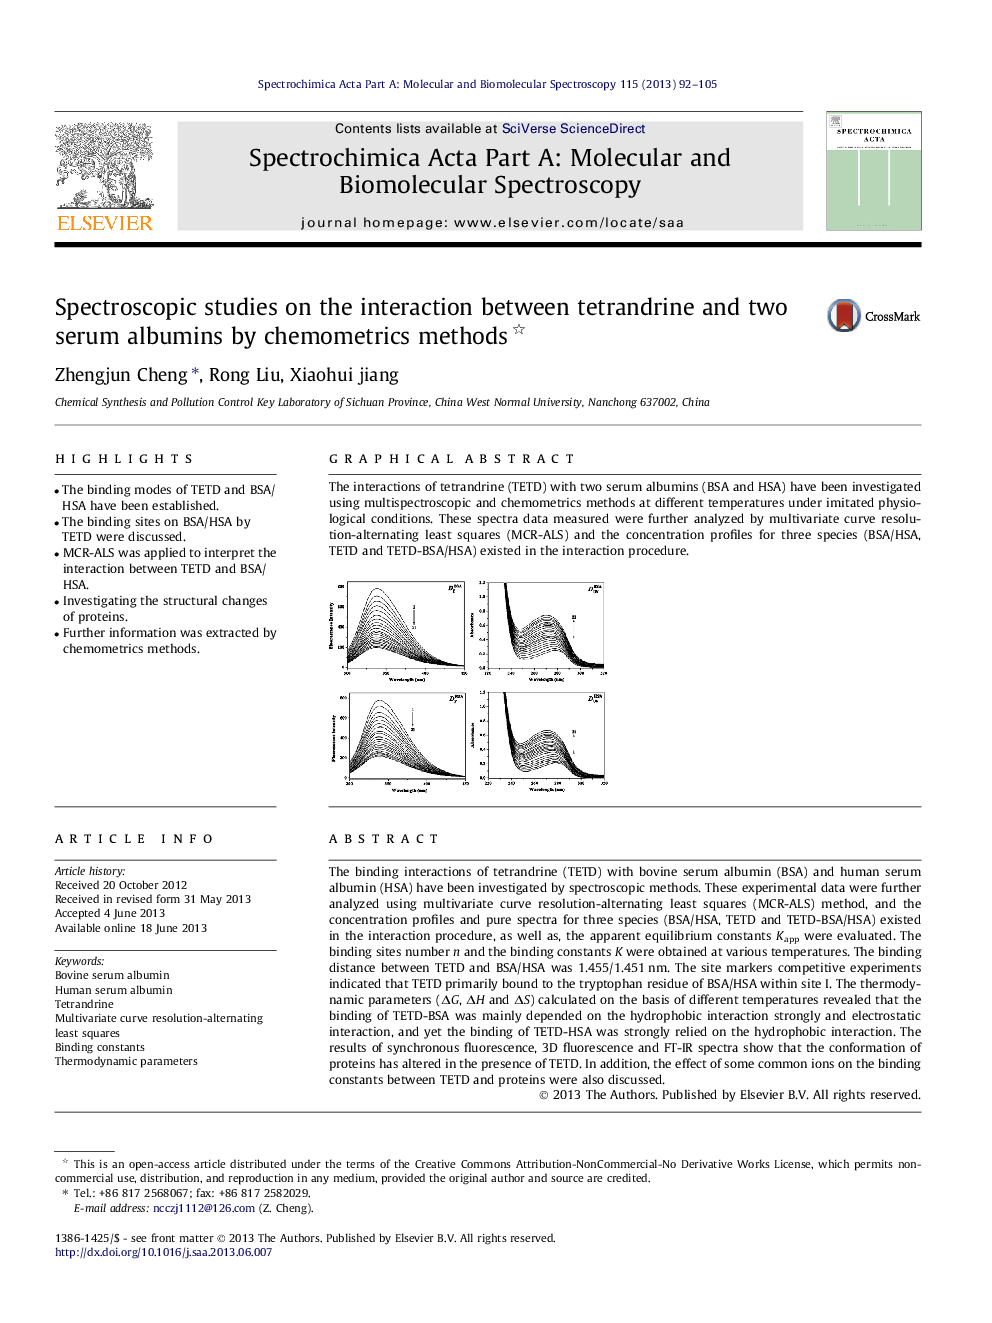 Spectroscopic studies on the interaction between tetrandrine and two serum albumins by chemometrics methods